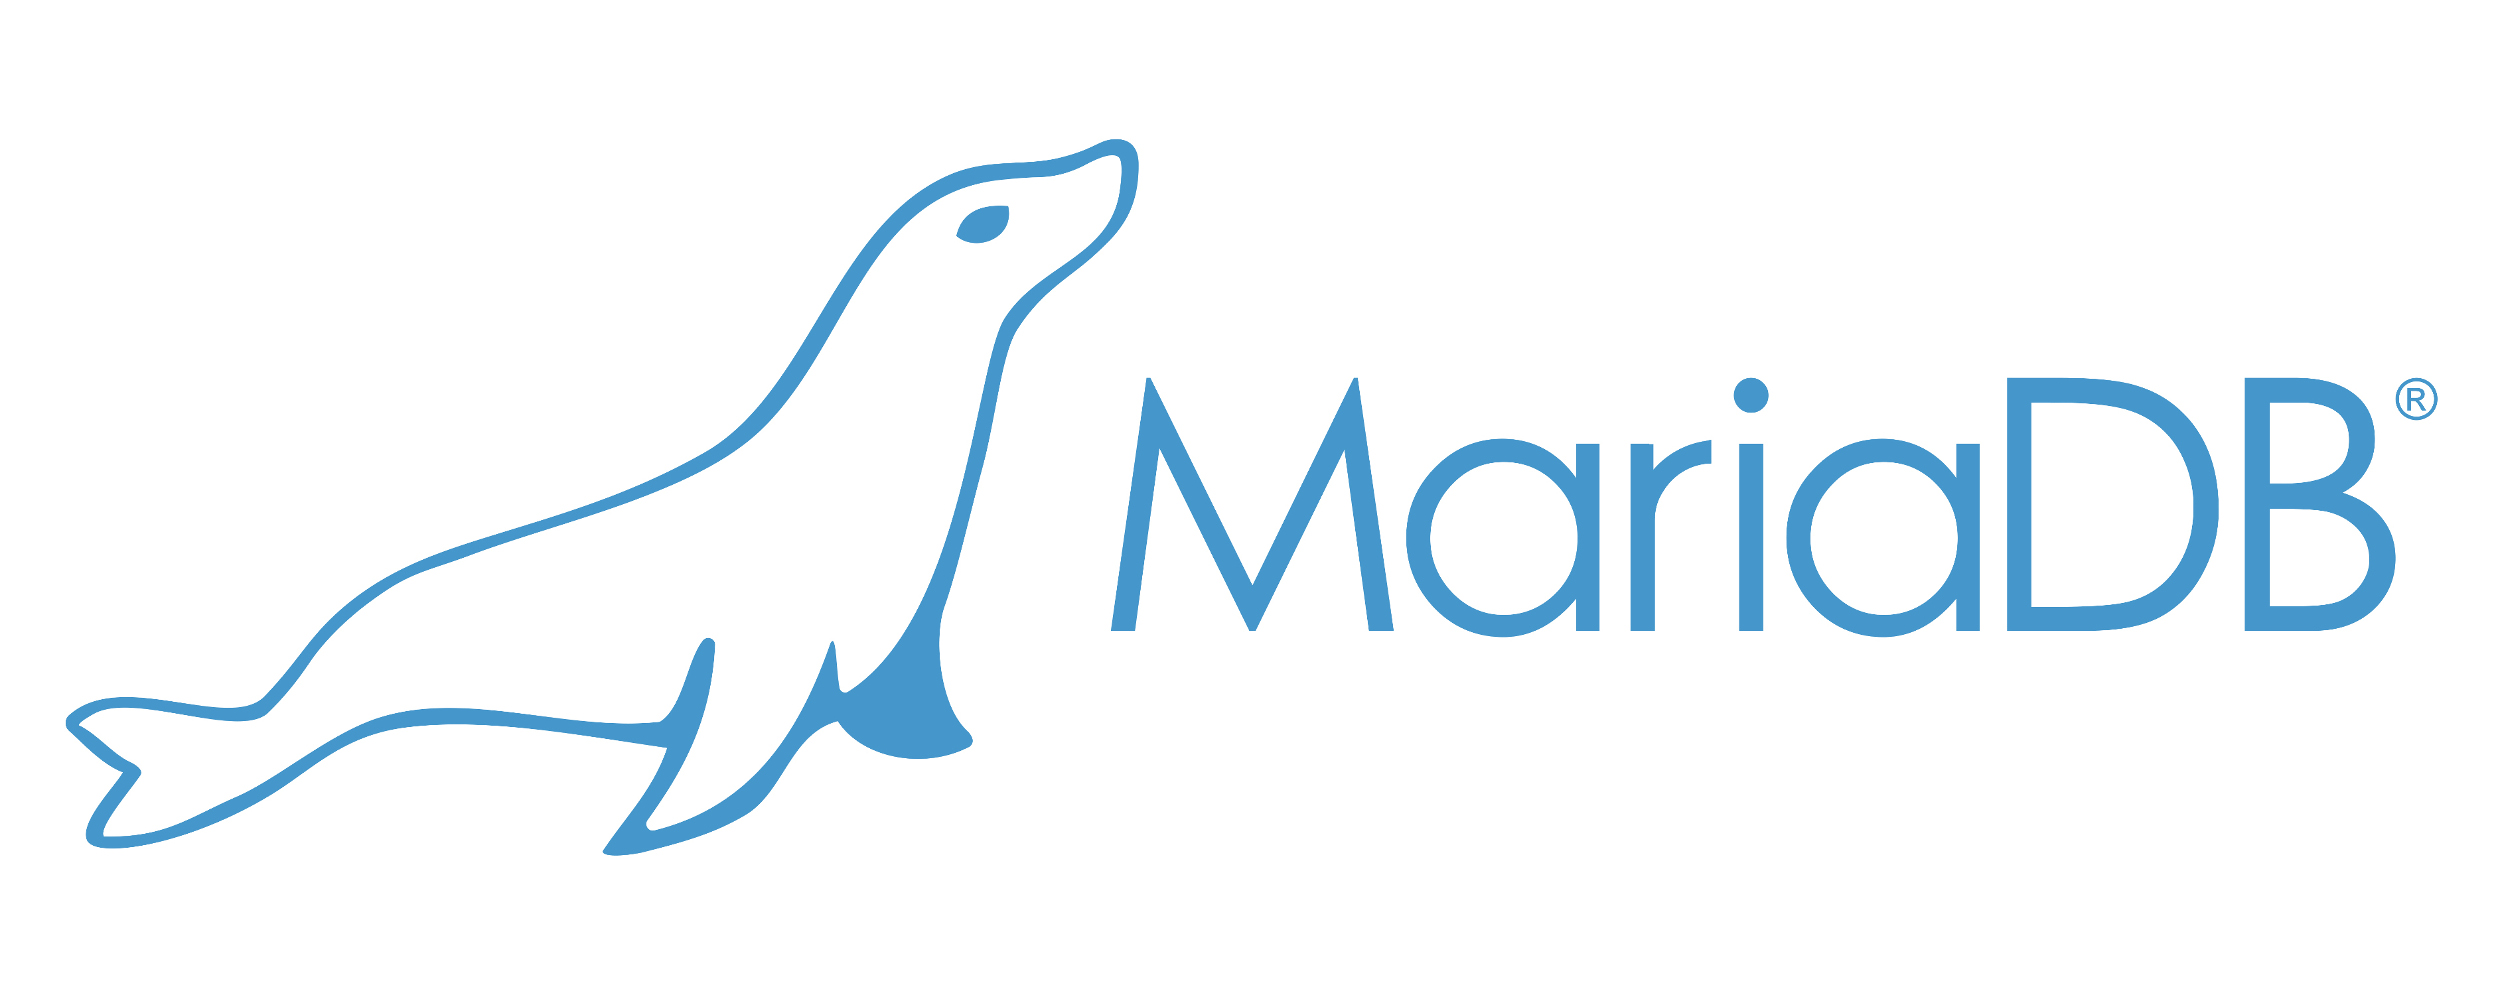 MariaDB macht dem Data Warehouse Dampf